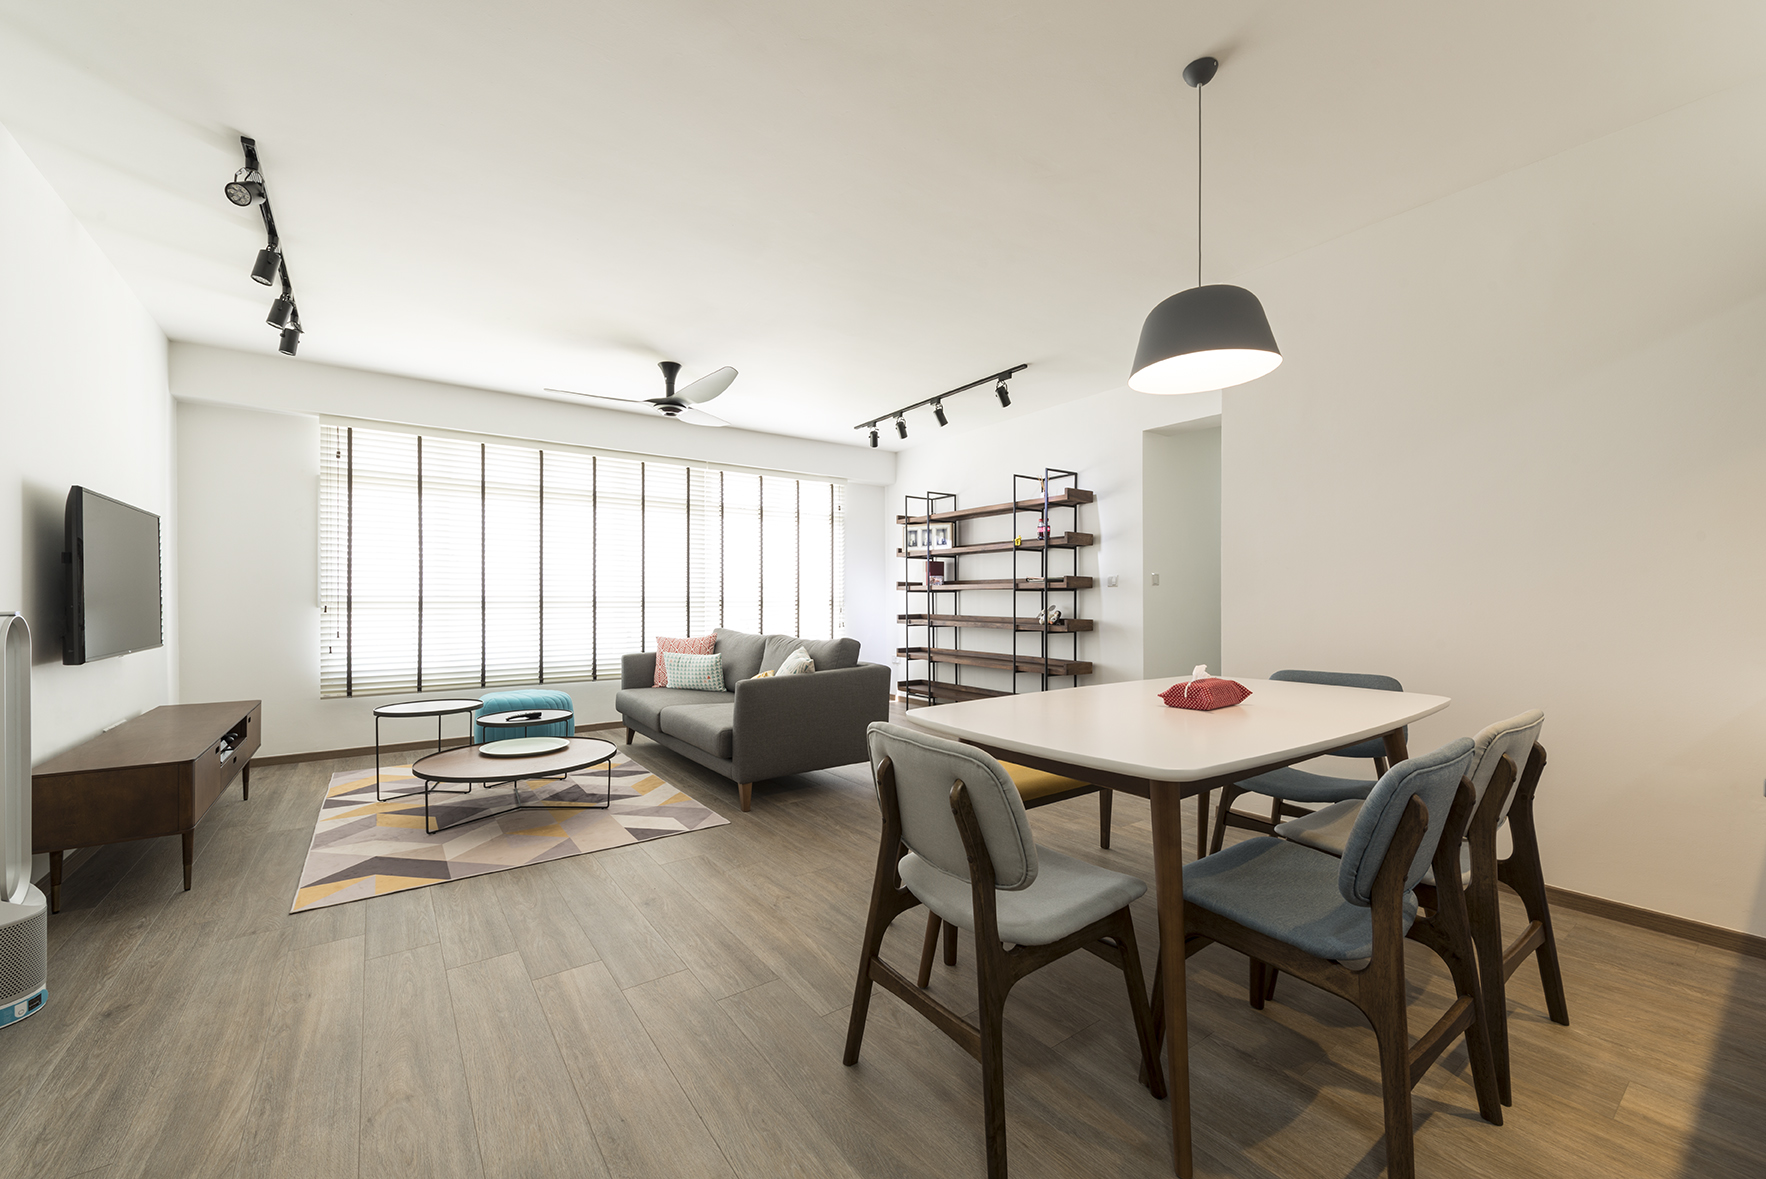 Country, Minimalist, Rustic Design - Living Room - HDB 5 Room - Design by TBG Interior Design